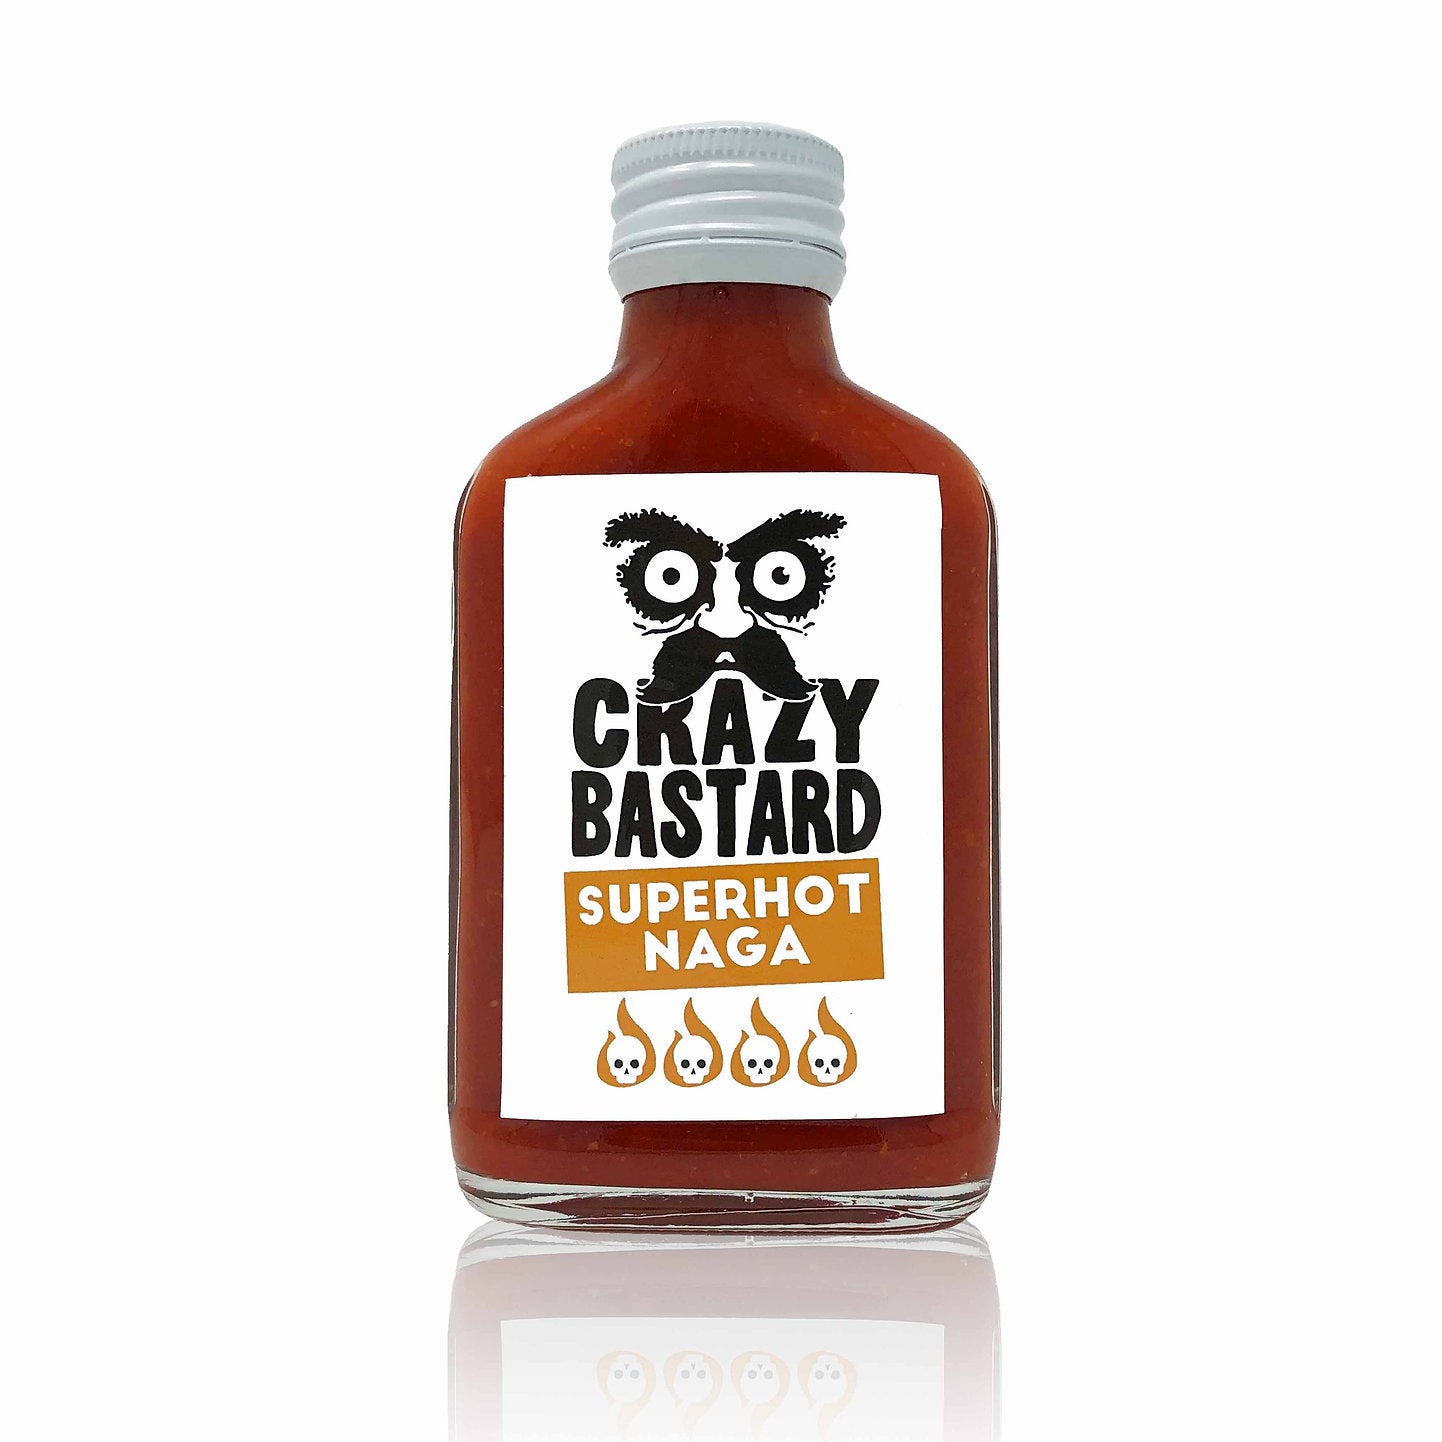 "Superhot Naga" Chili Sauce